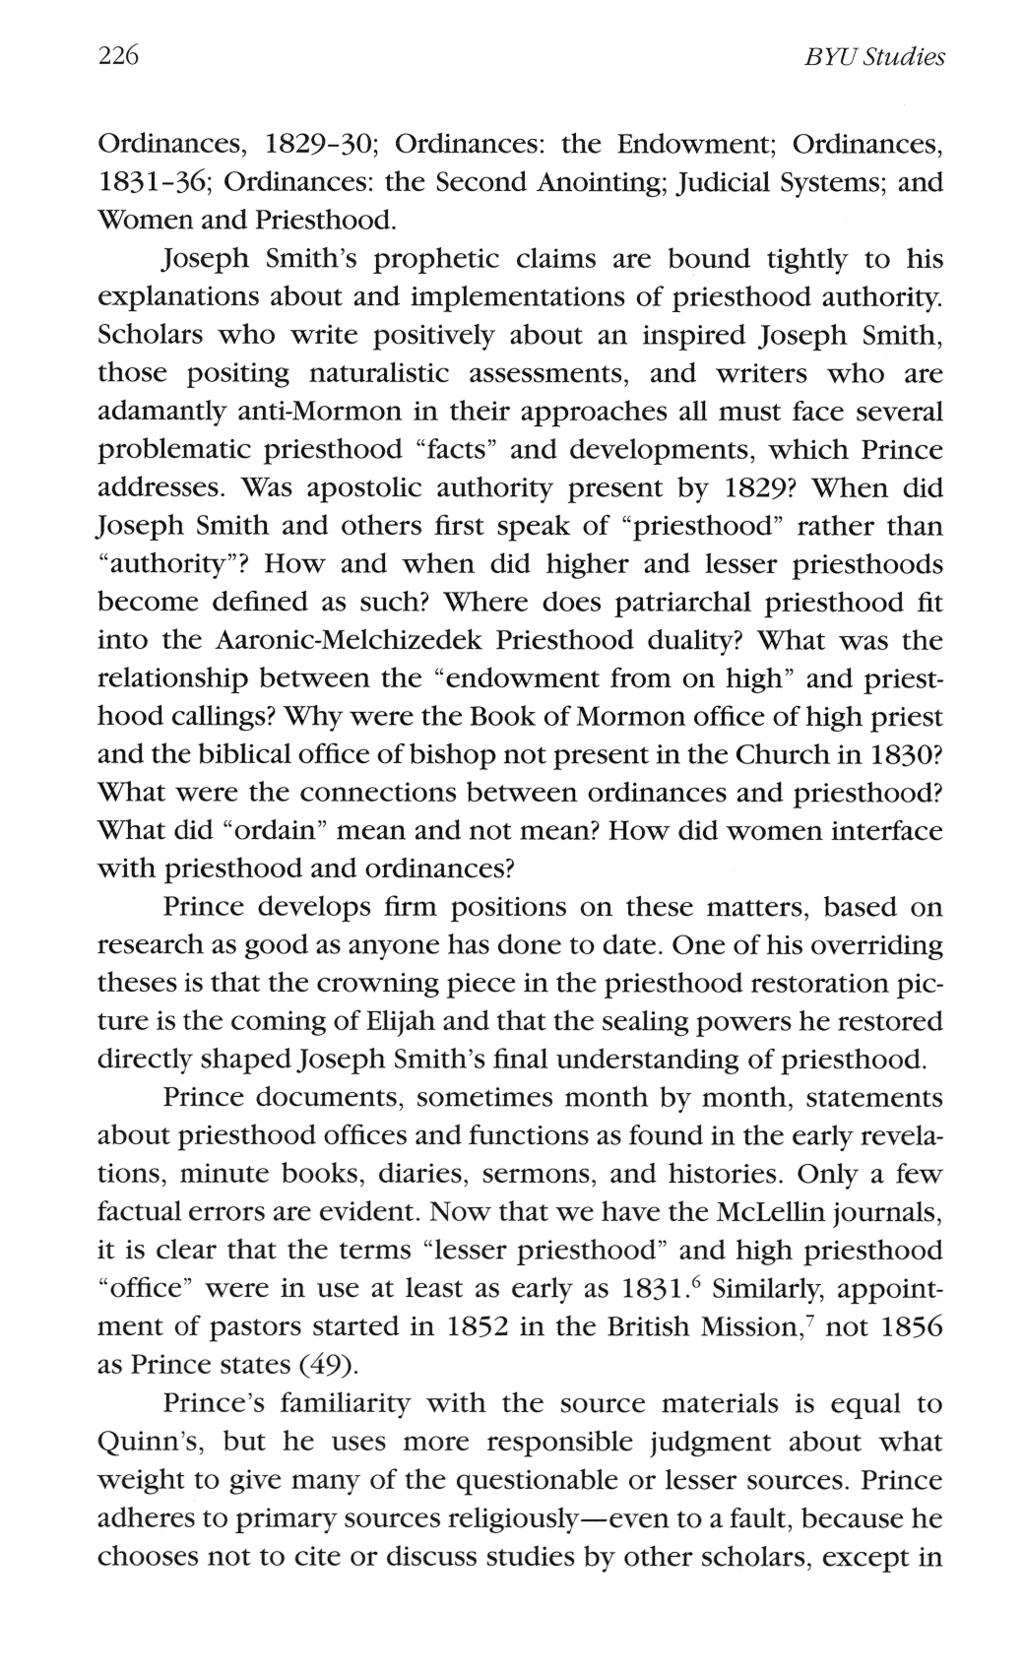 BYU Studies Quarterly, Vol. 37, Iss. 1 [1997], Art.